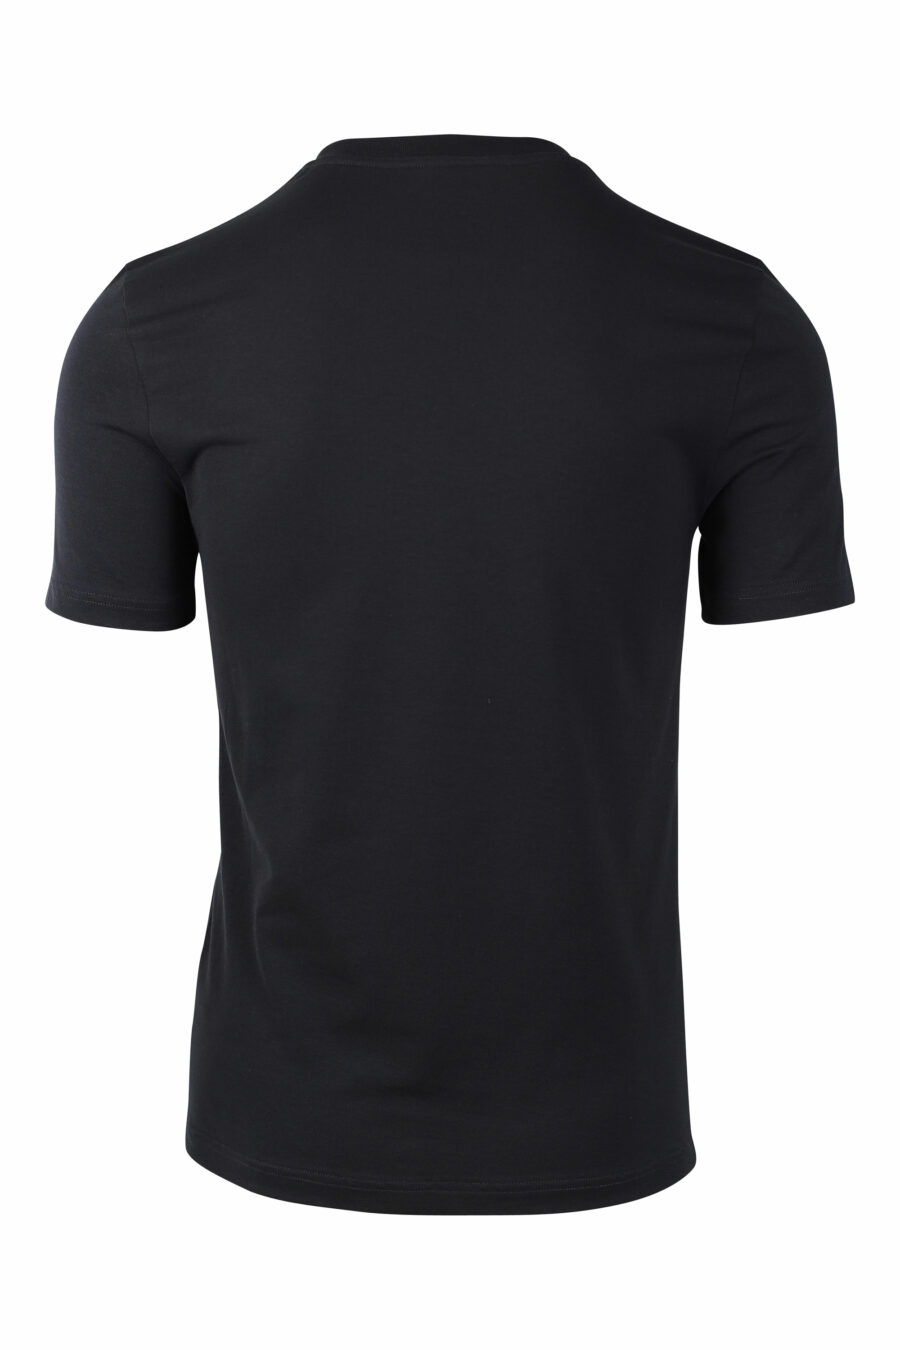 Black T-shirt with "signature" logo - IMG 1486